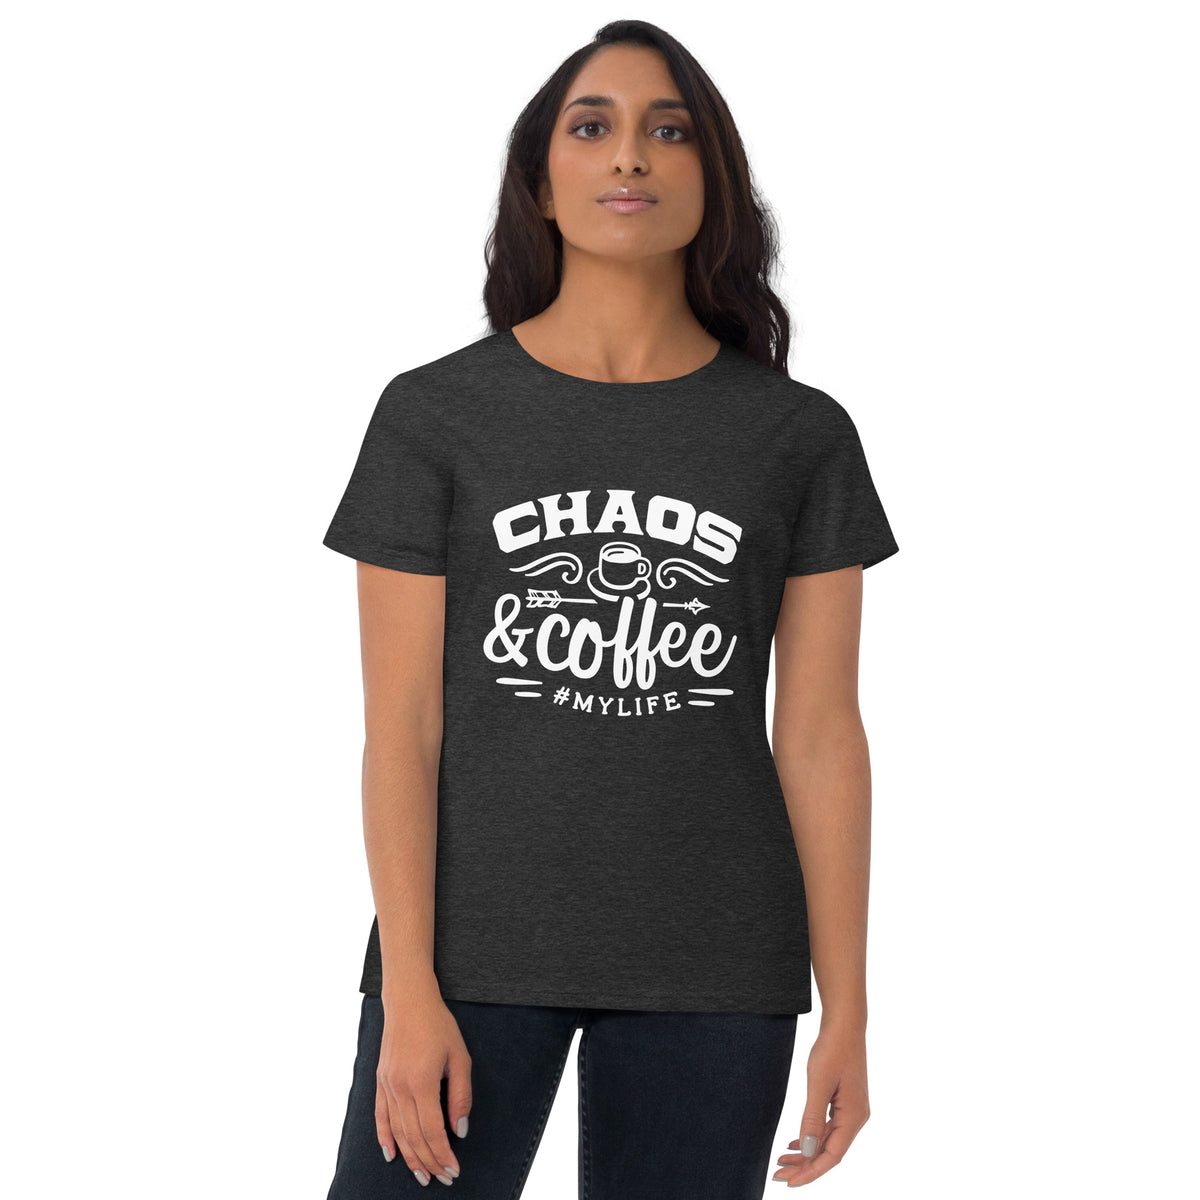 Chaos & Coffee My Life Women's Short Sleeve T-Shirt